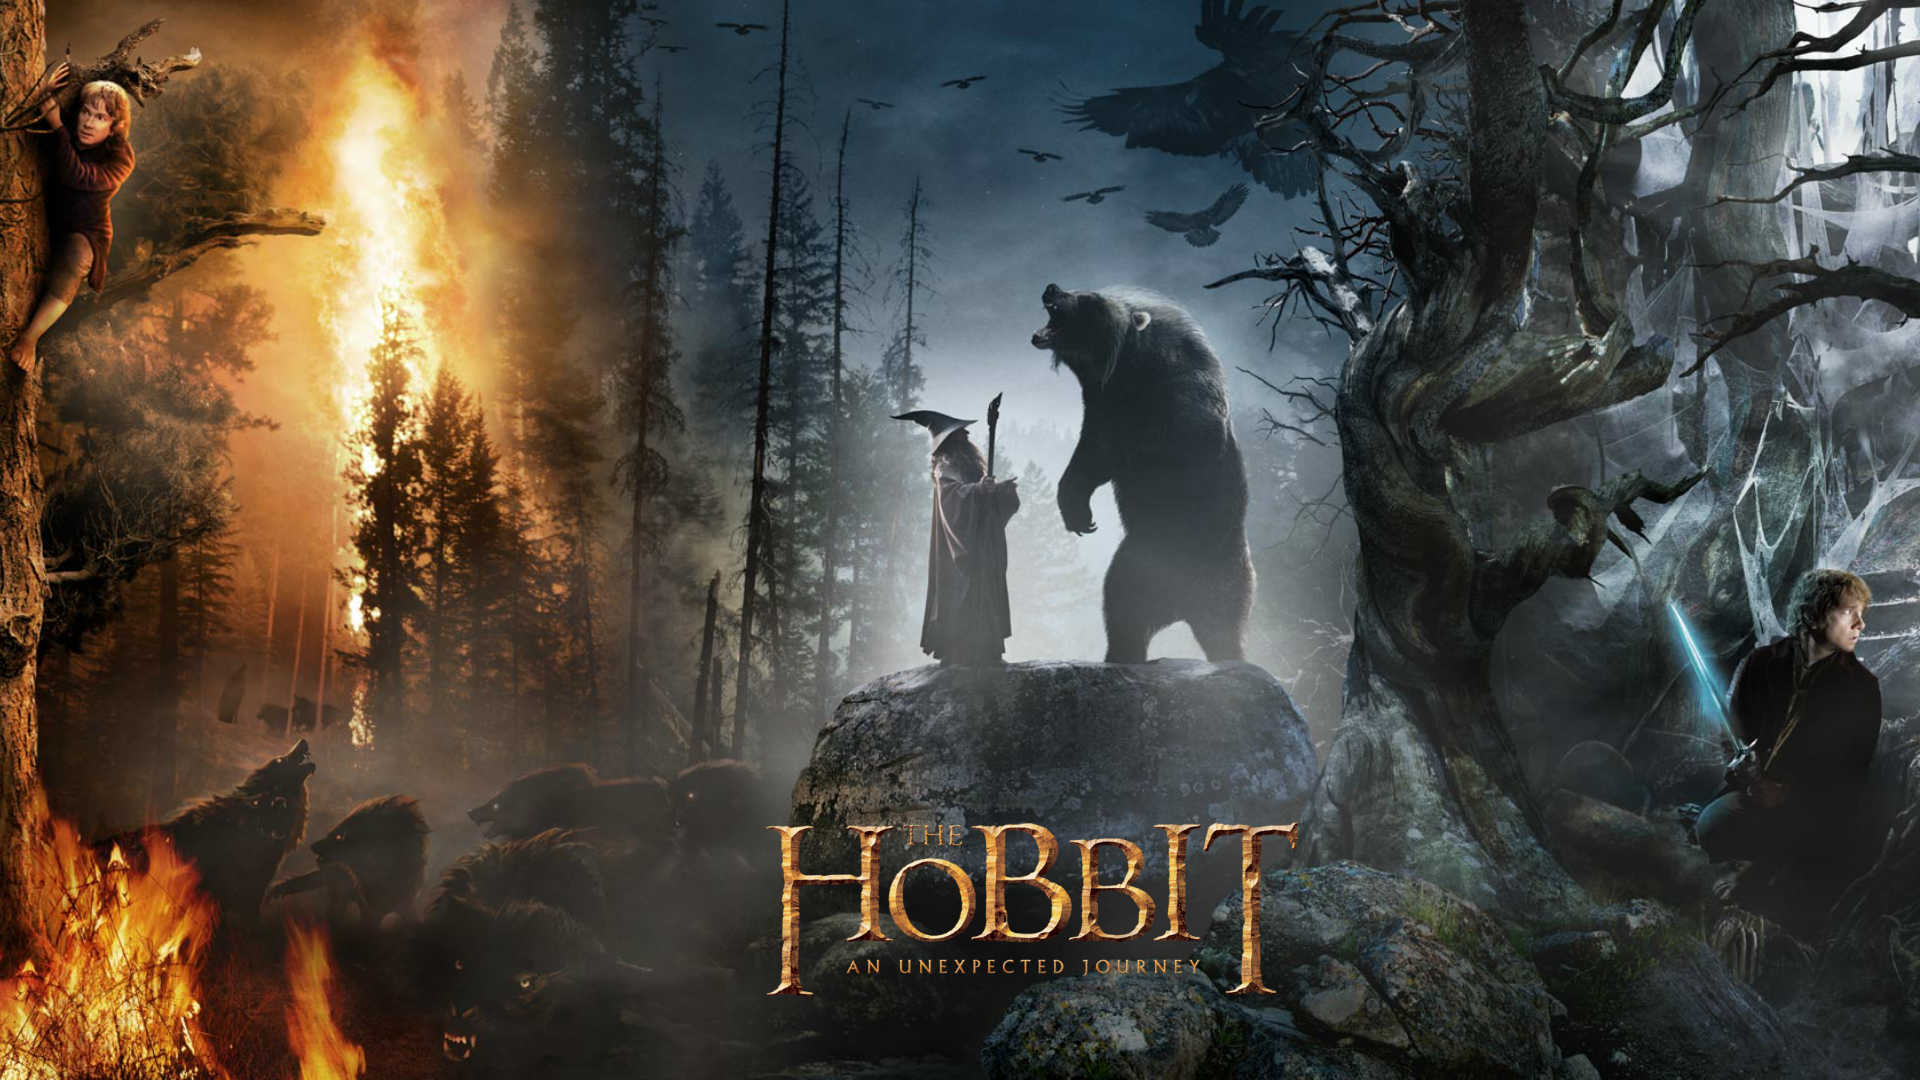 Hobbit Part 1 - An Unexpected Journey 3